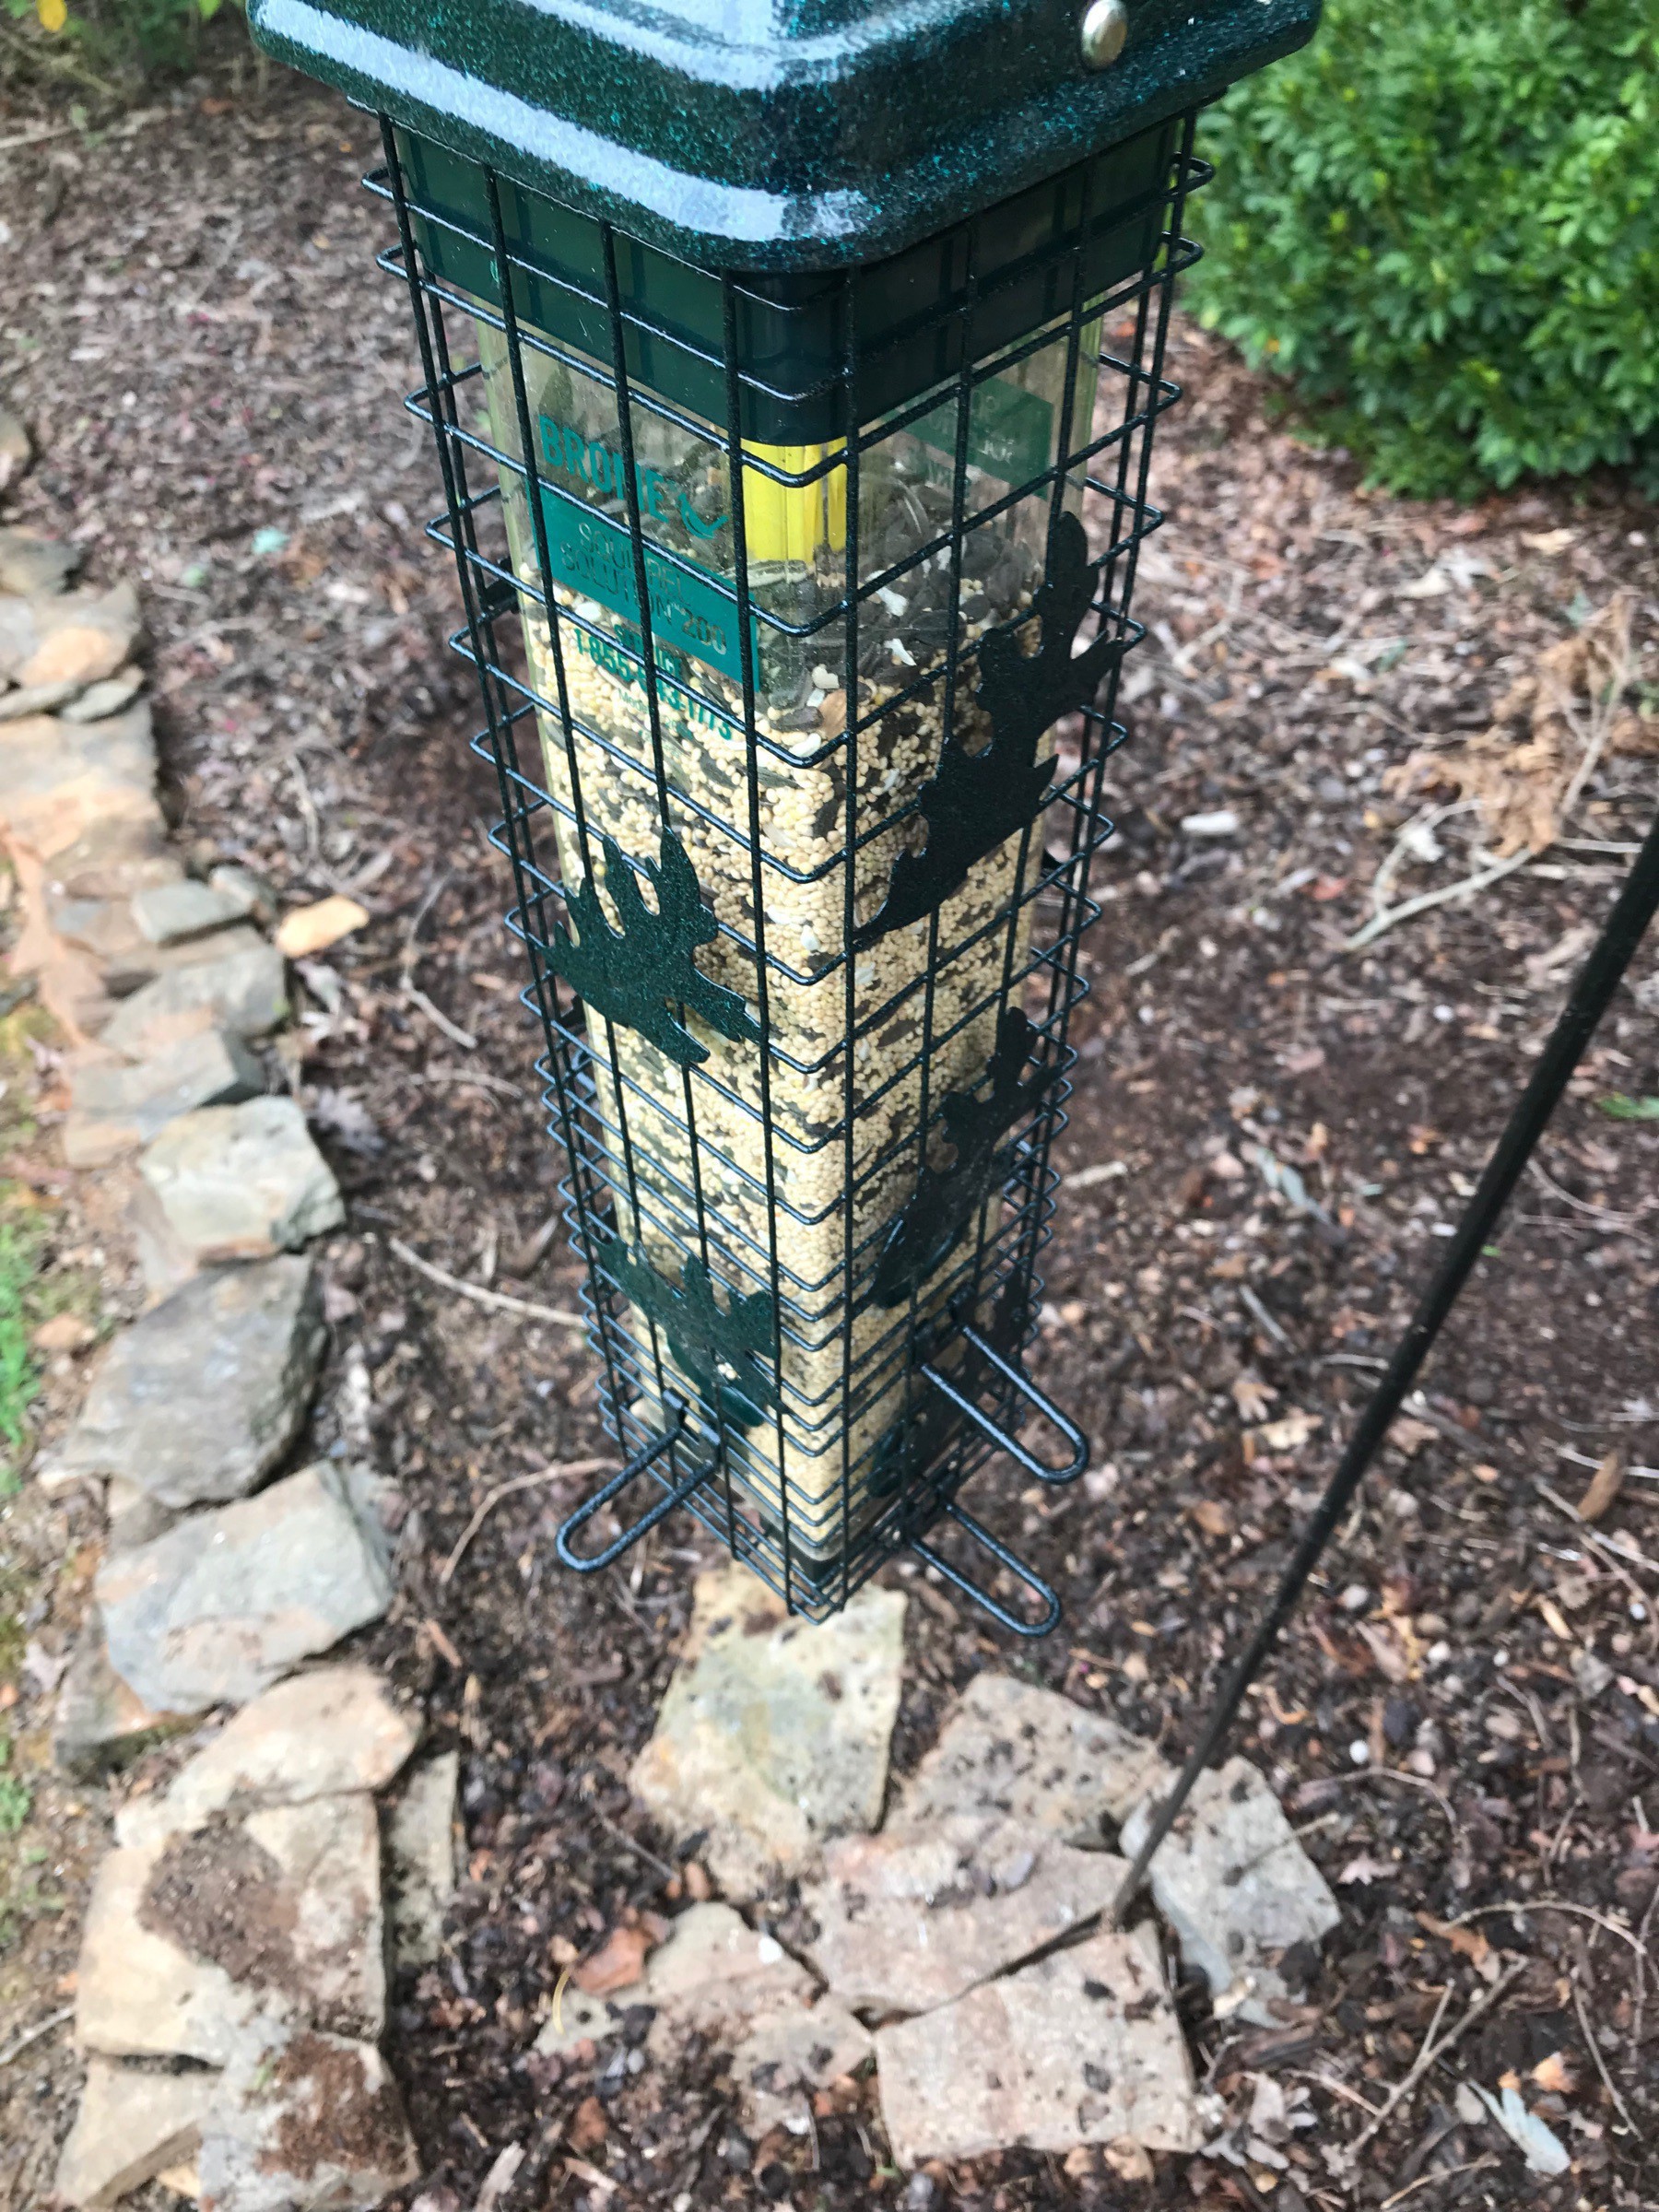 rearranged landscaping stones to cover bare ground beneath bird feeder